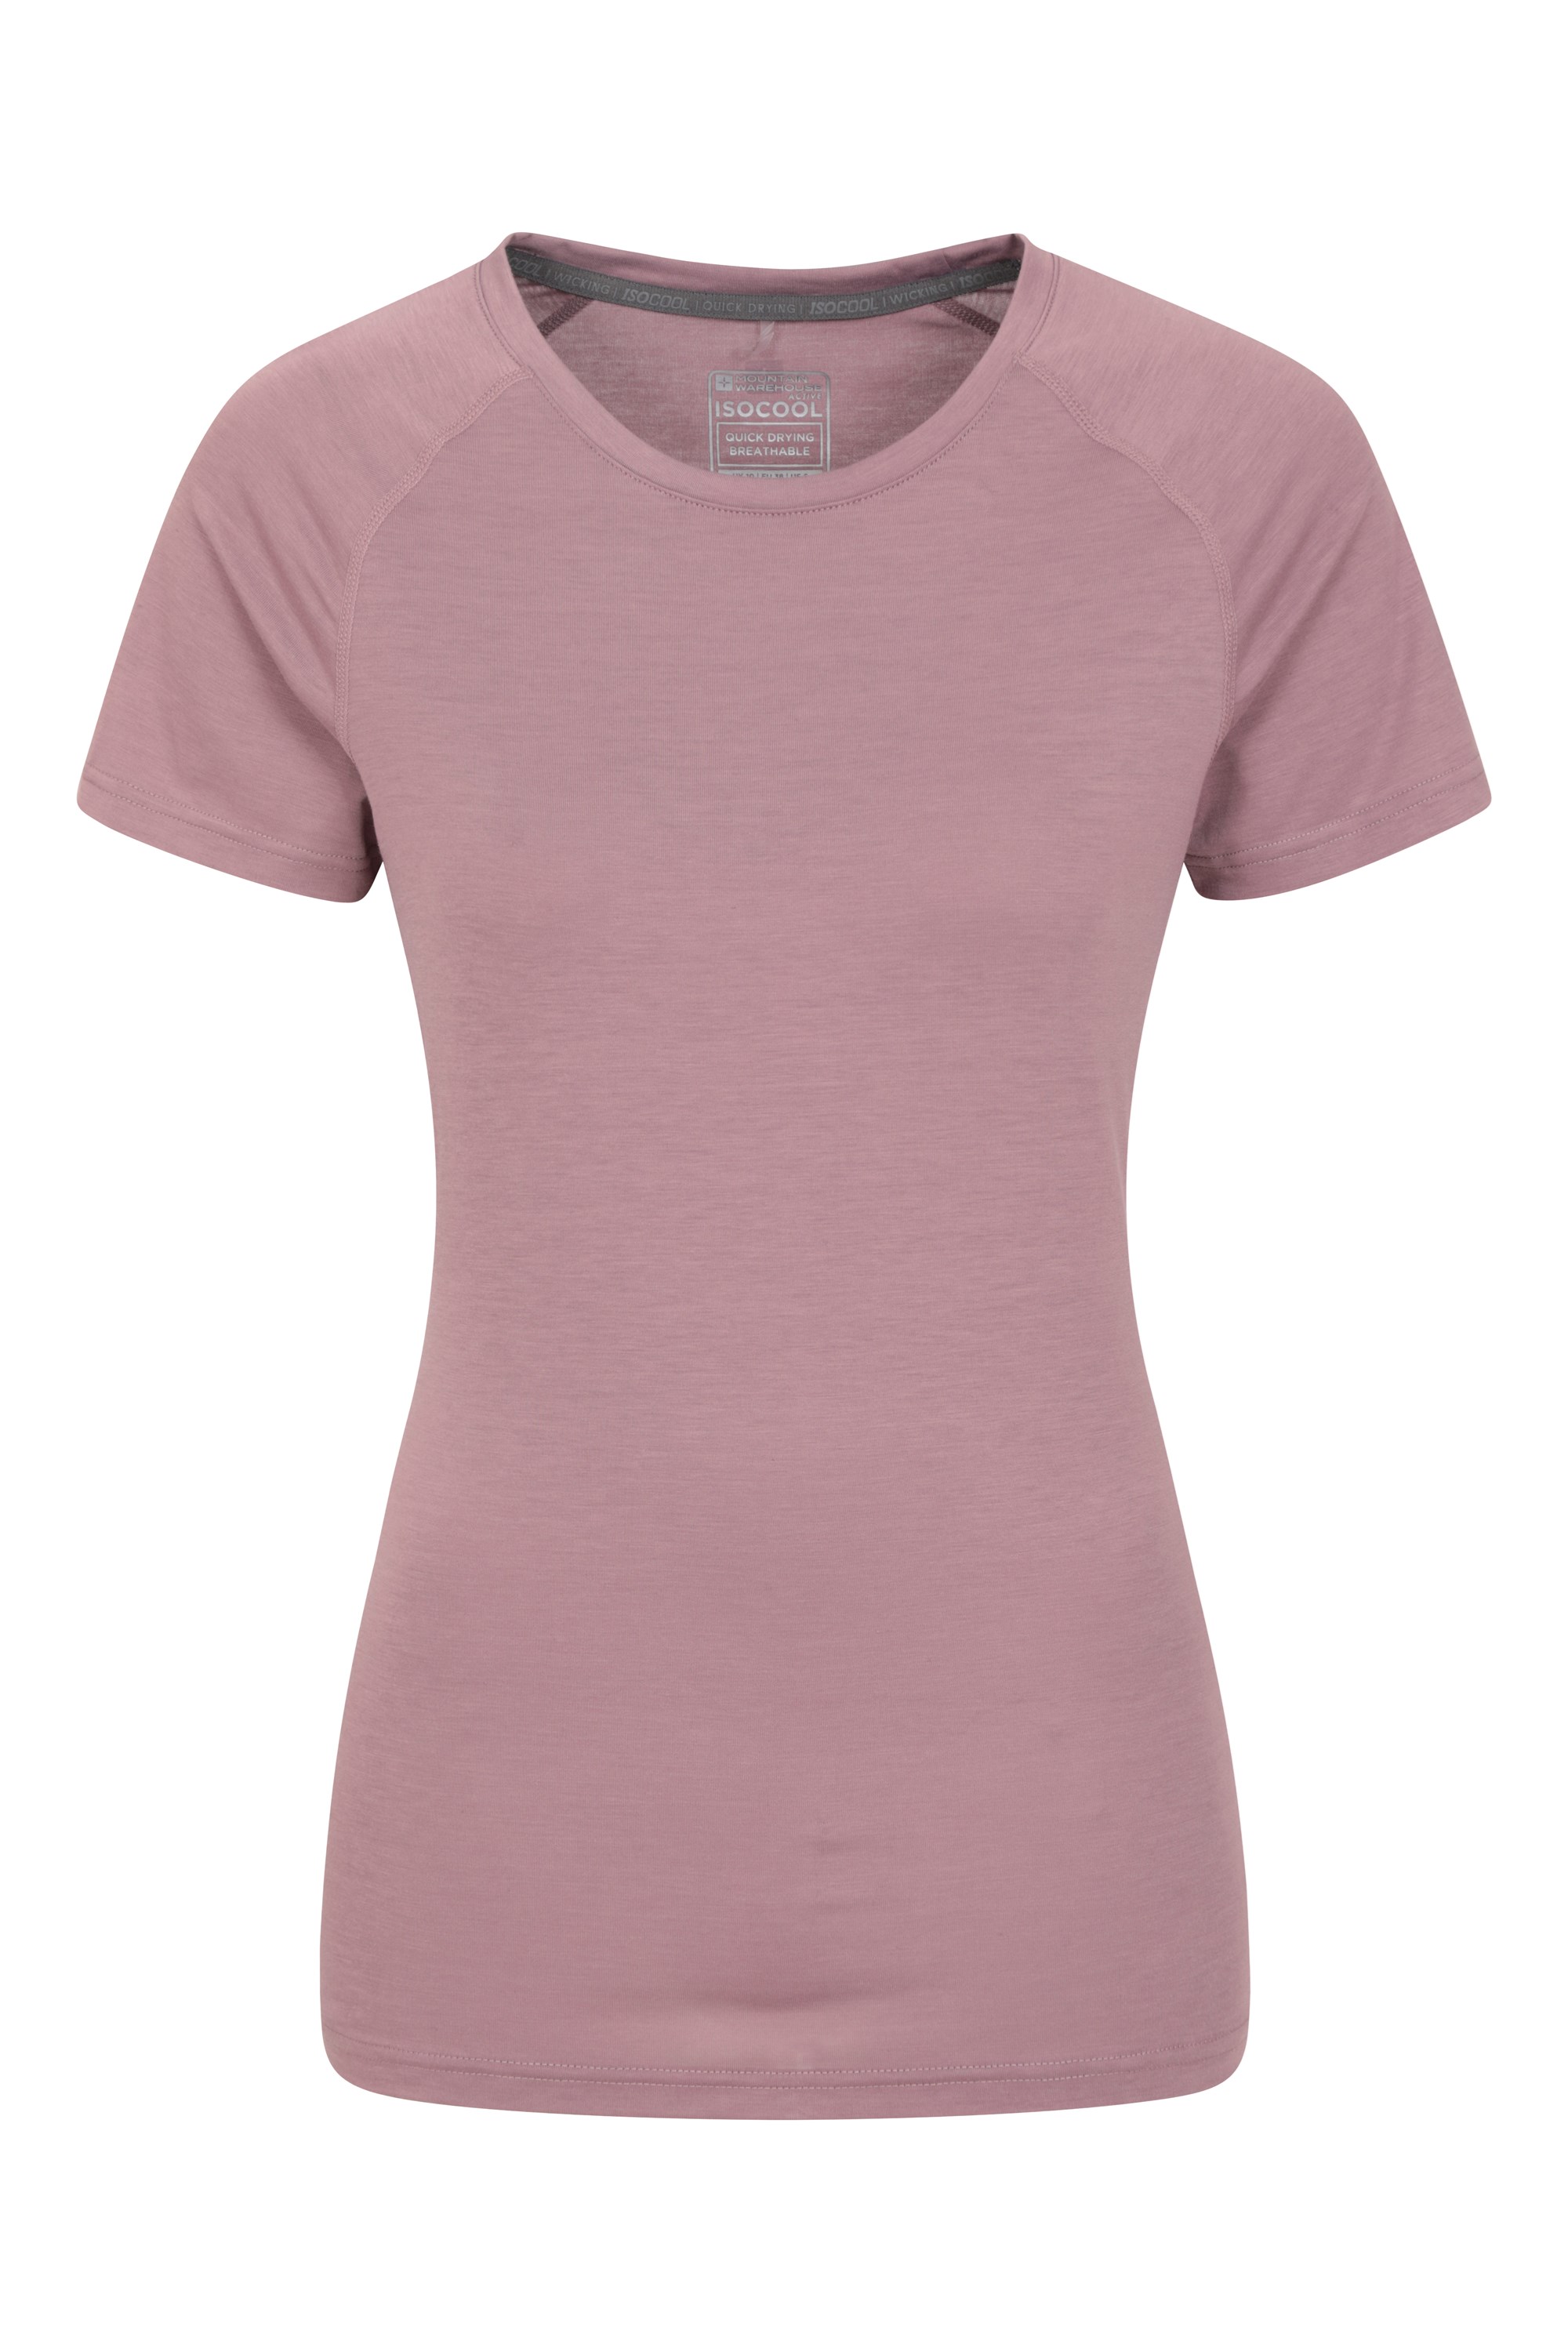 camiseta ligera Mountain Warehouse Top IsoCool Dynamic para mujer Camiseta cómoda para mujer camiseta transpirable correr Para viajar secado rápido 